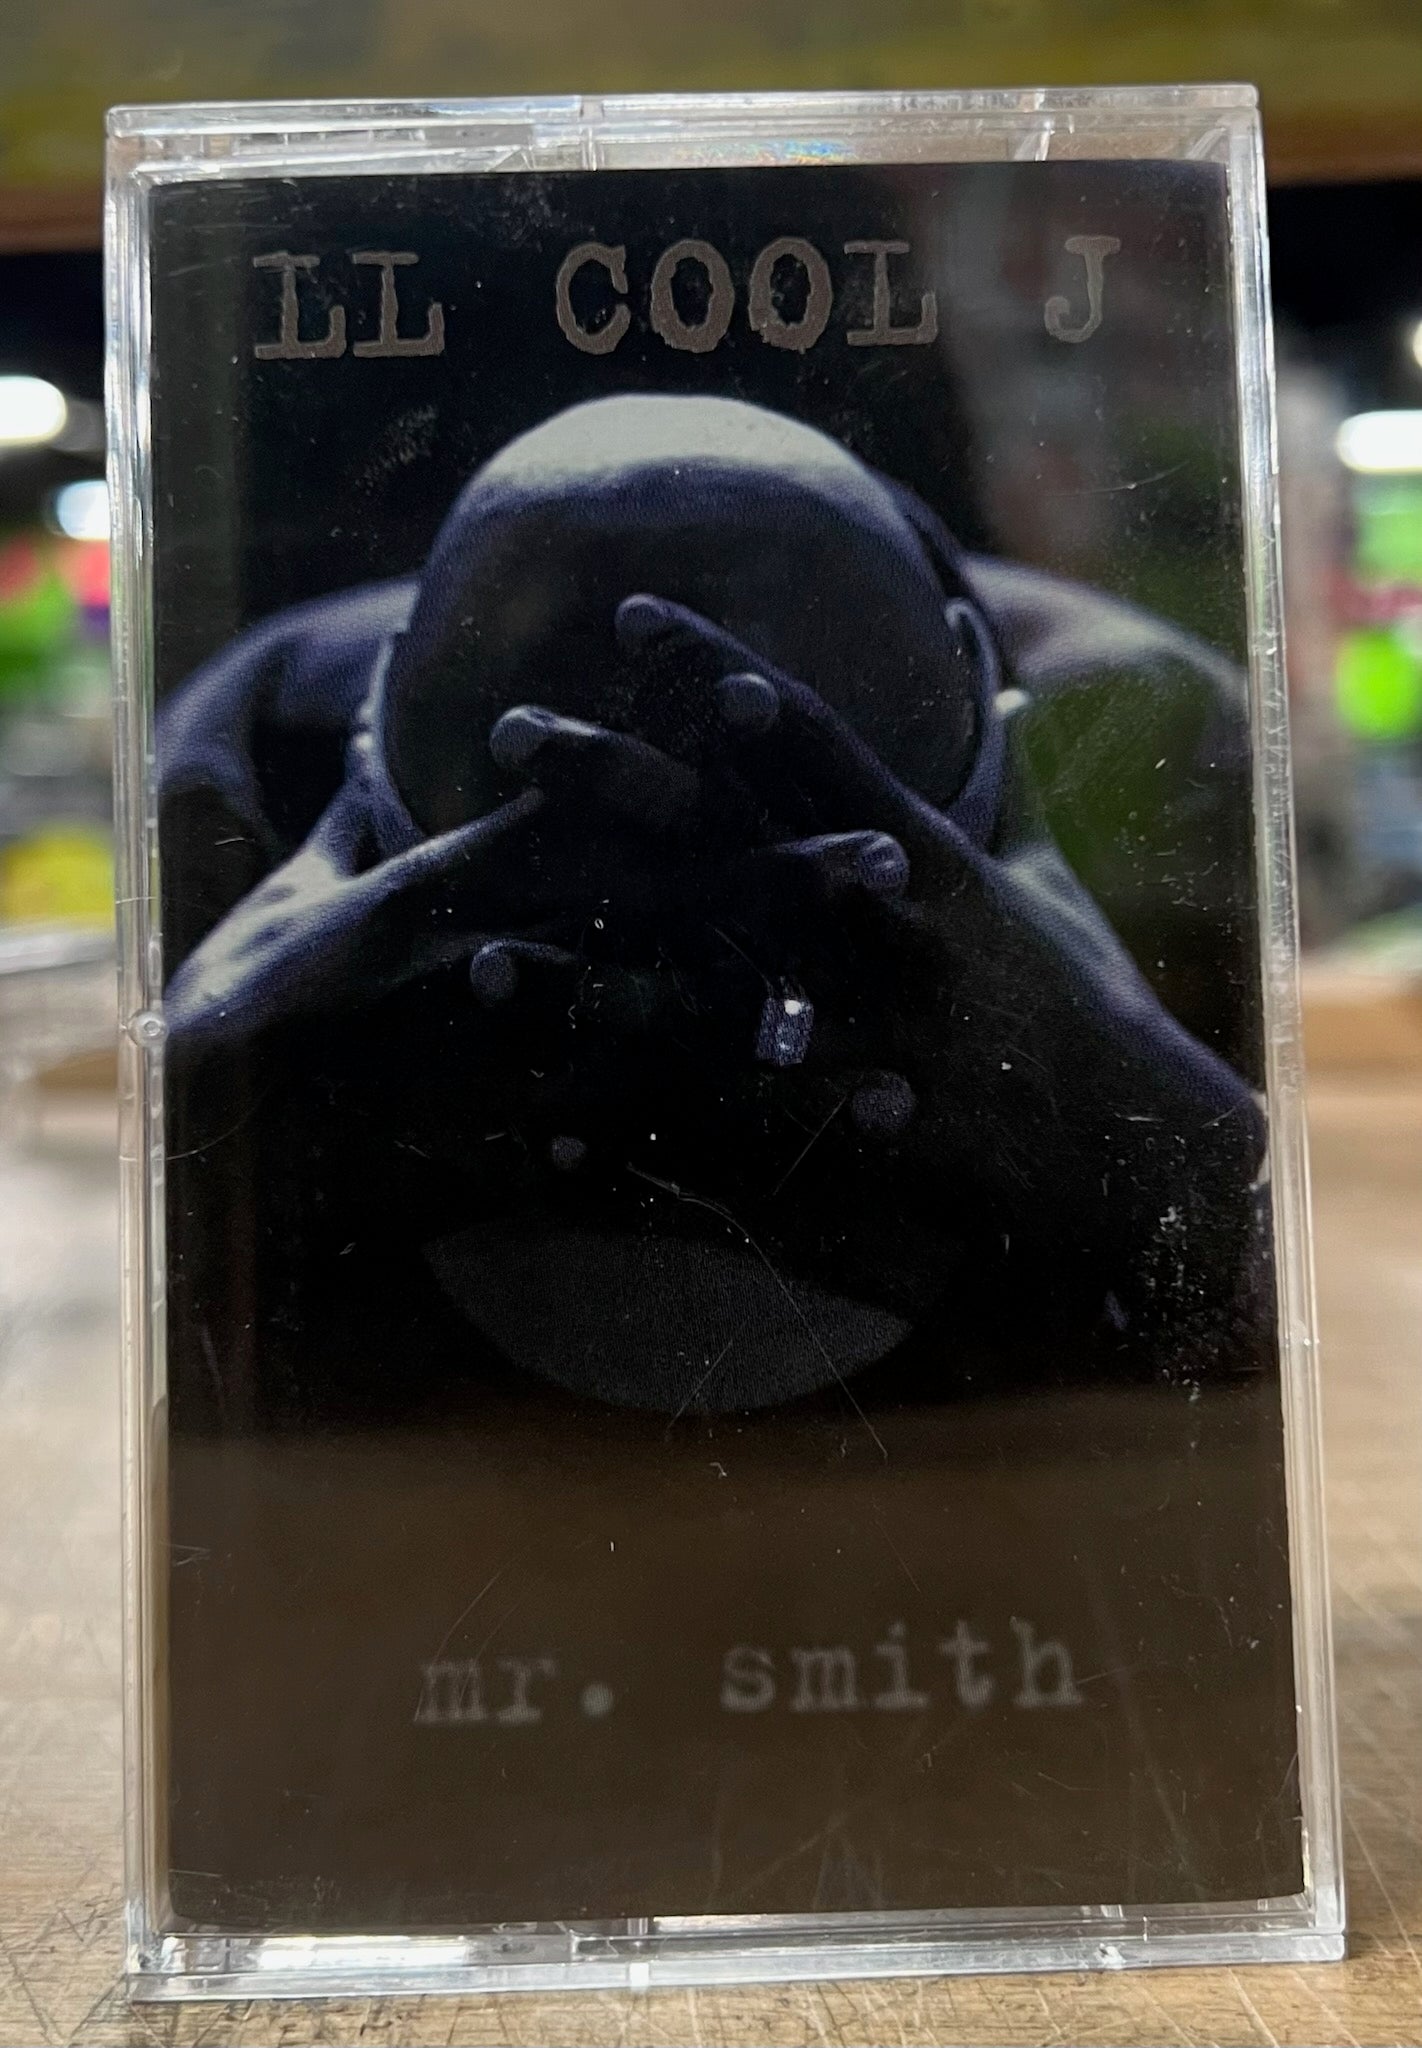 LL Cool J- Mr. Smith